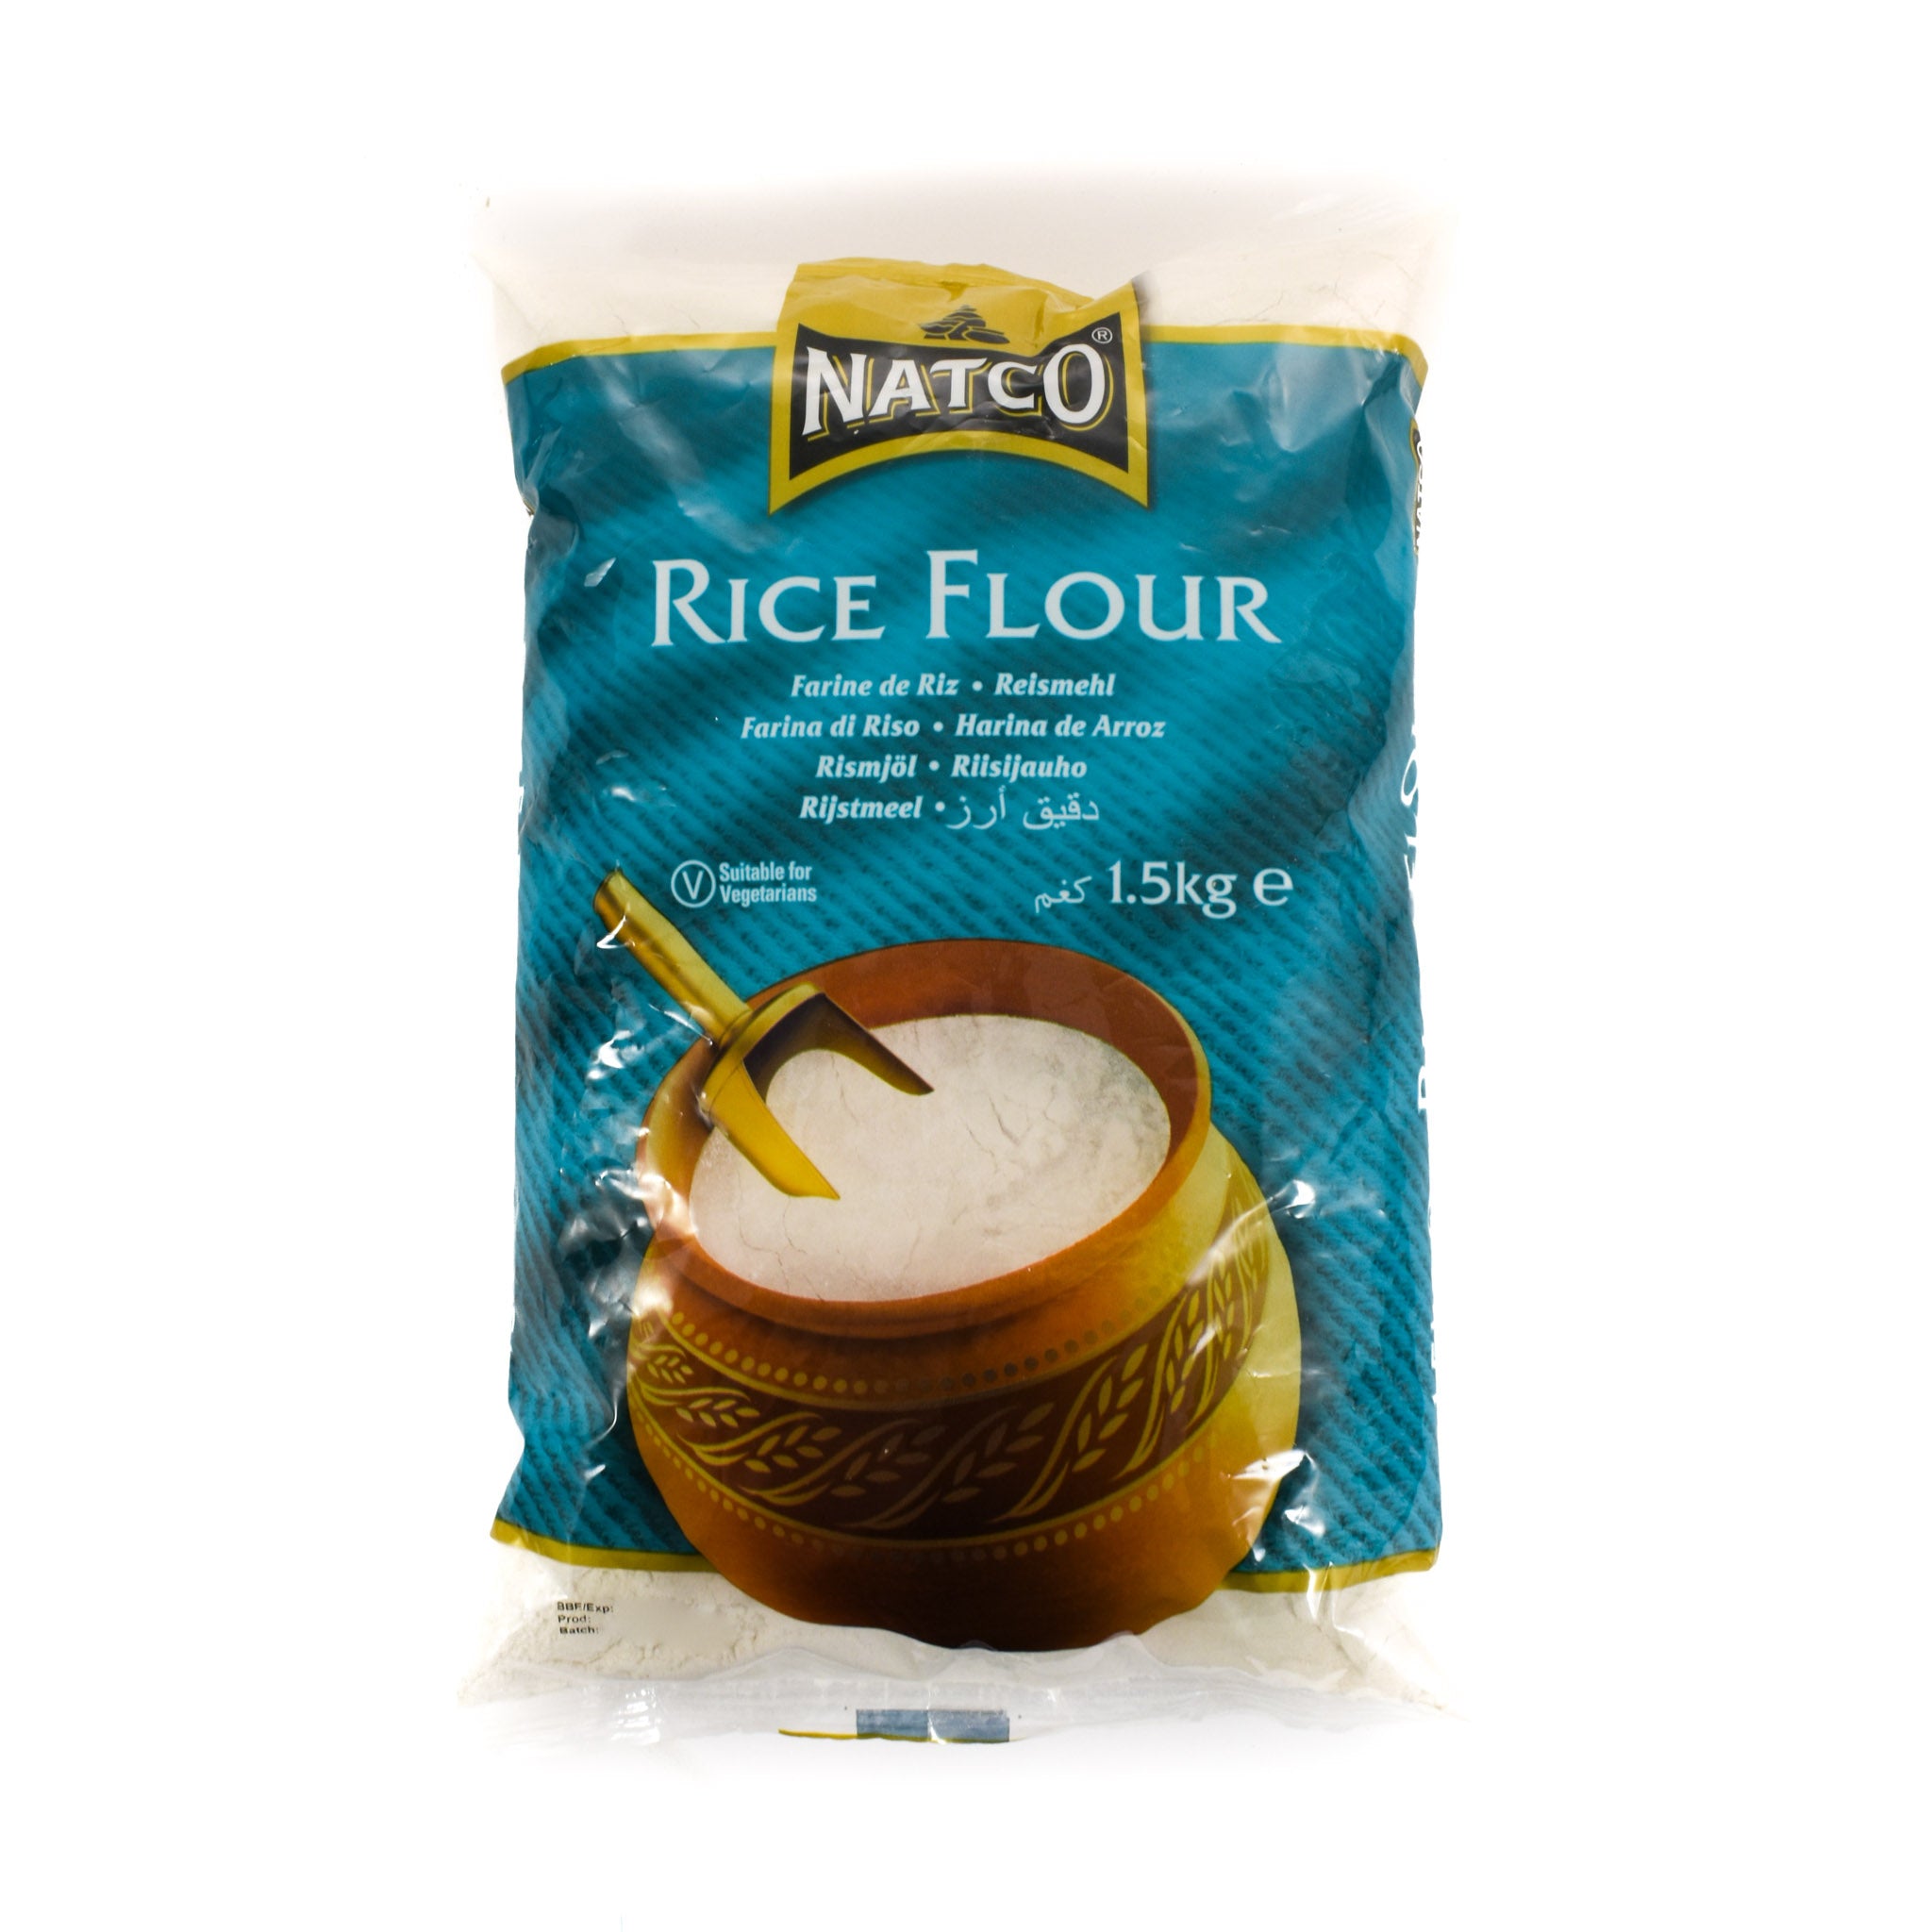 Natco Rice Flour 1.5kg